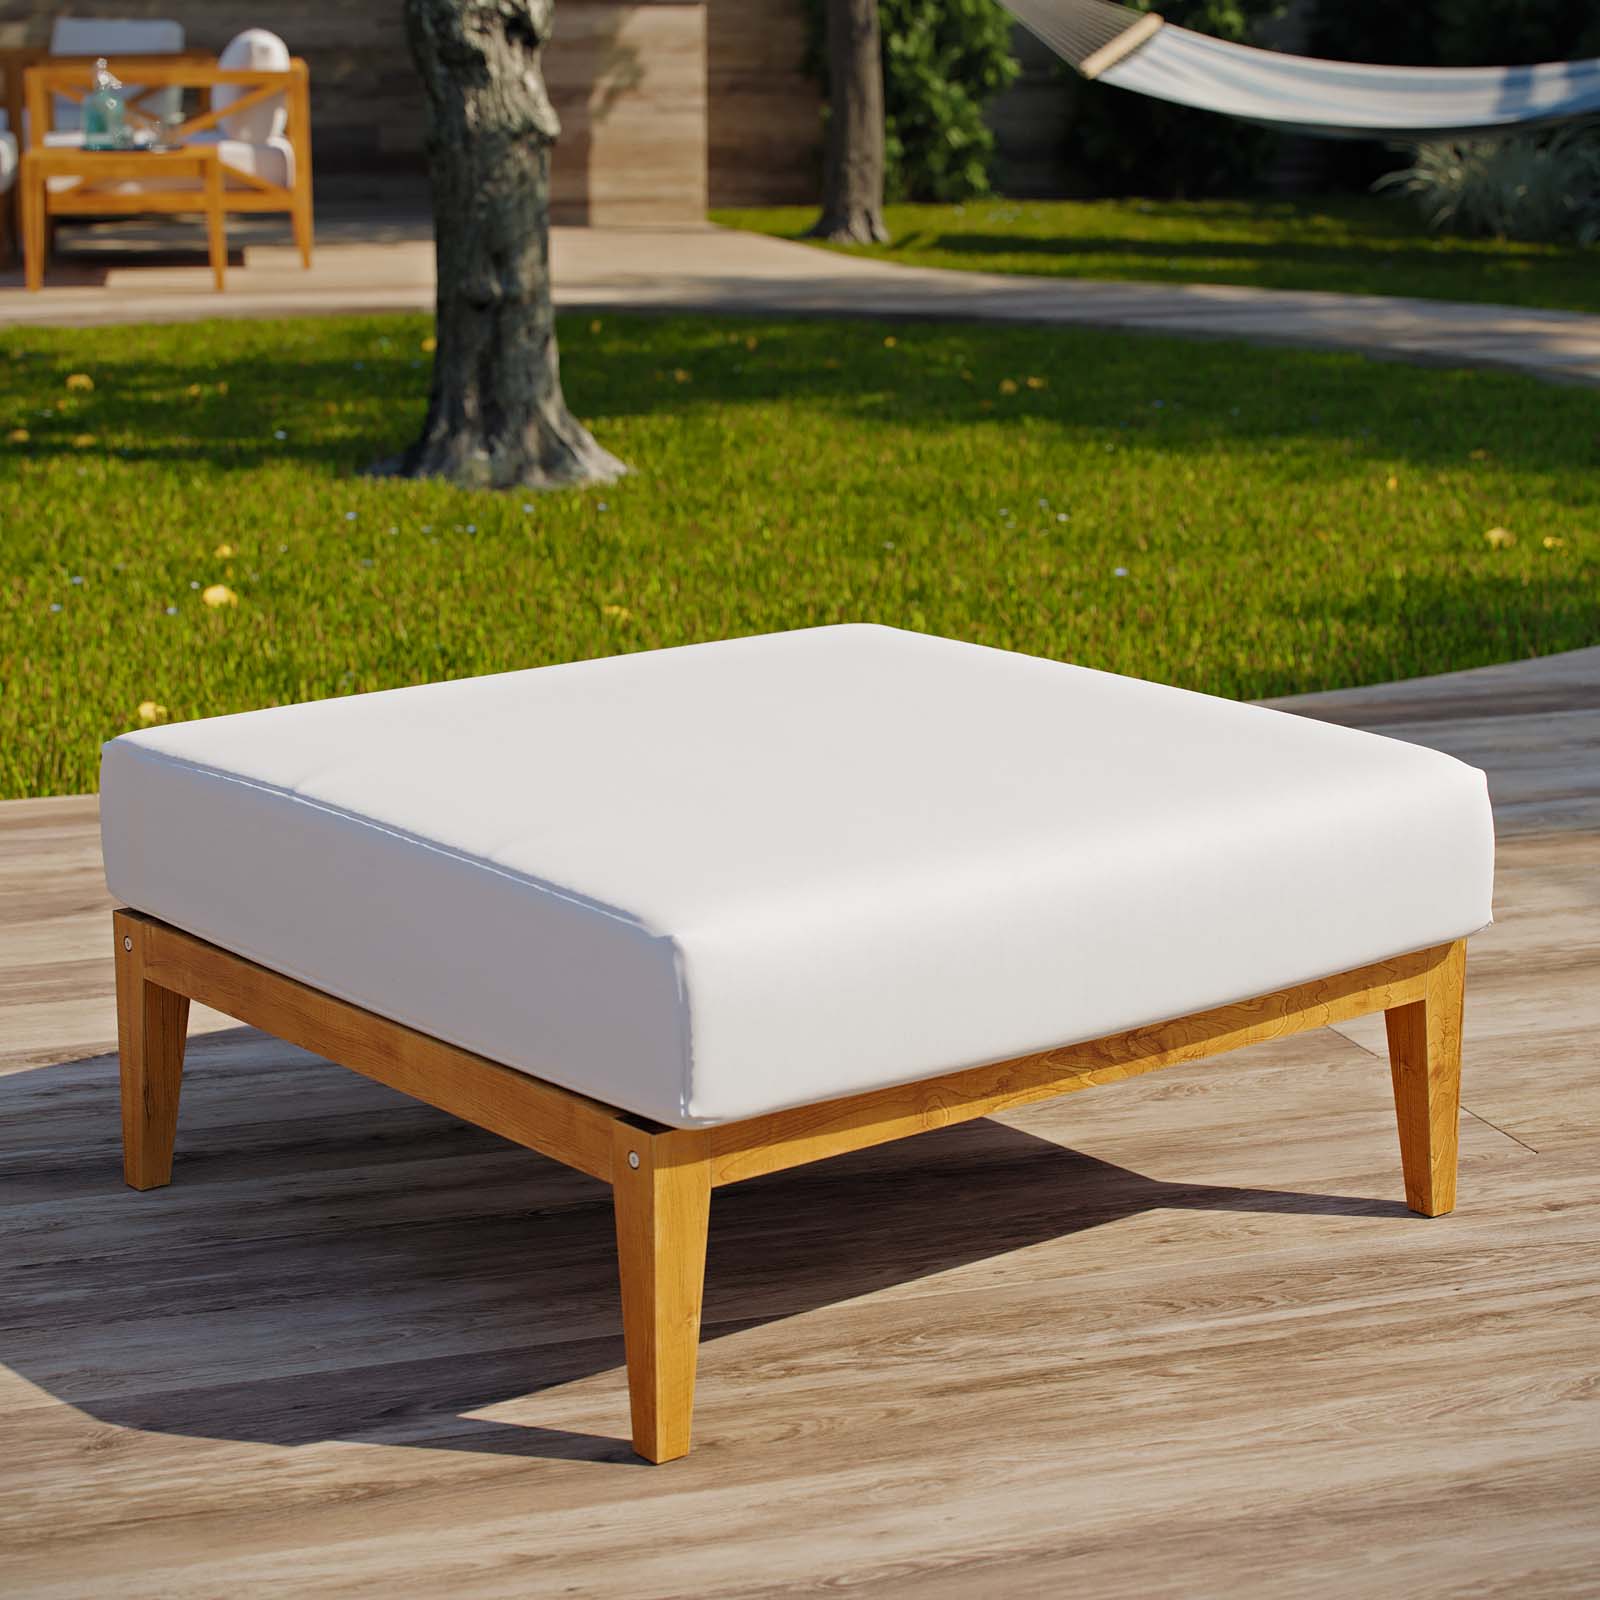 Contemporary Modern Urban Designer Outdoor Patio Balcony Garden Furniture Lounge Chair Ottoman, Wood, Natural White - image 2 of 4